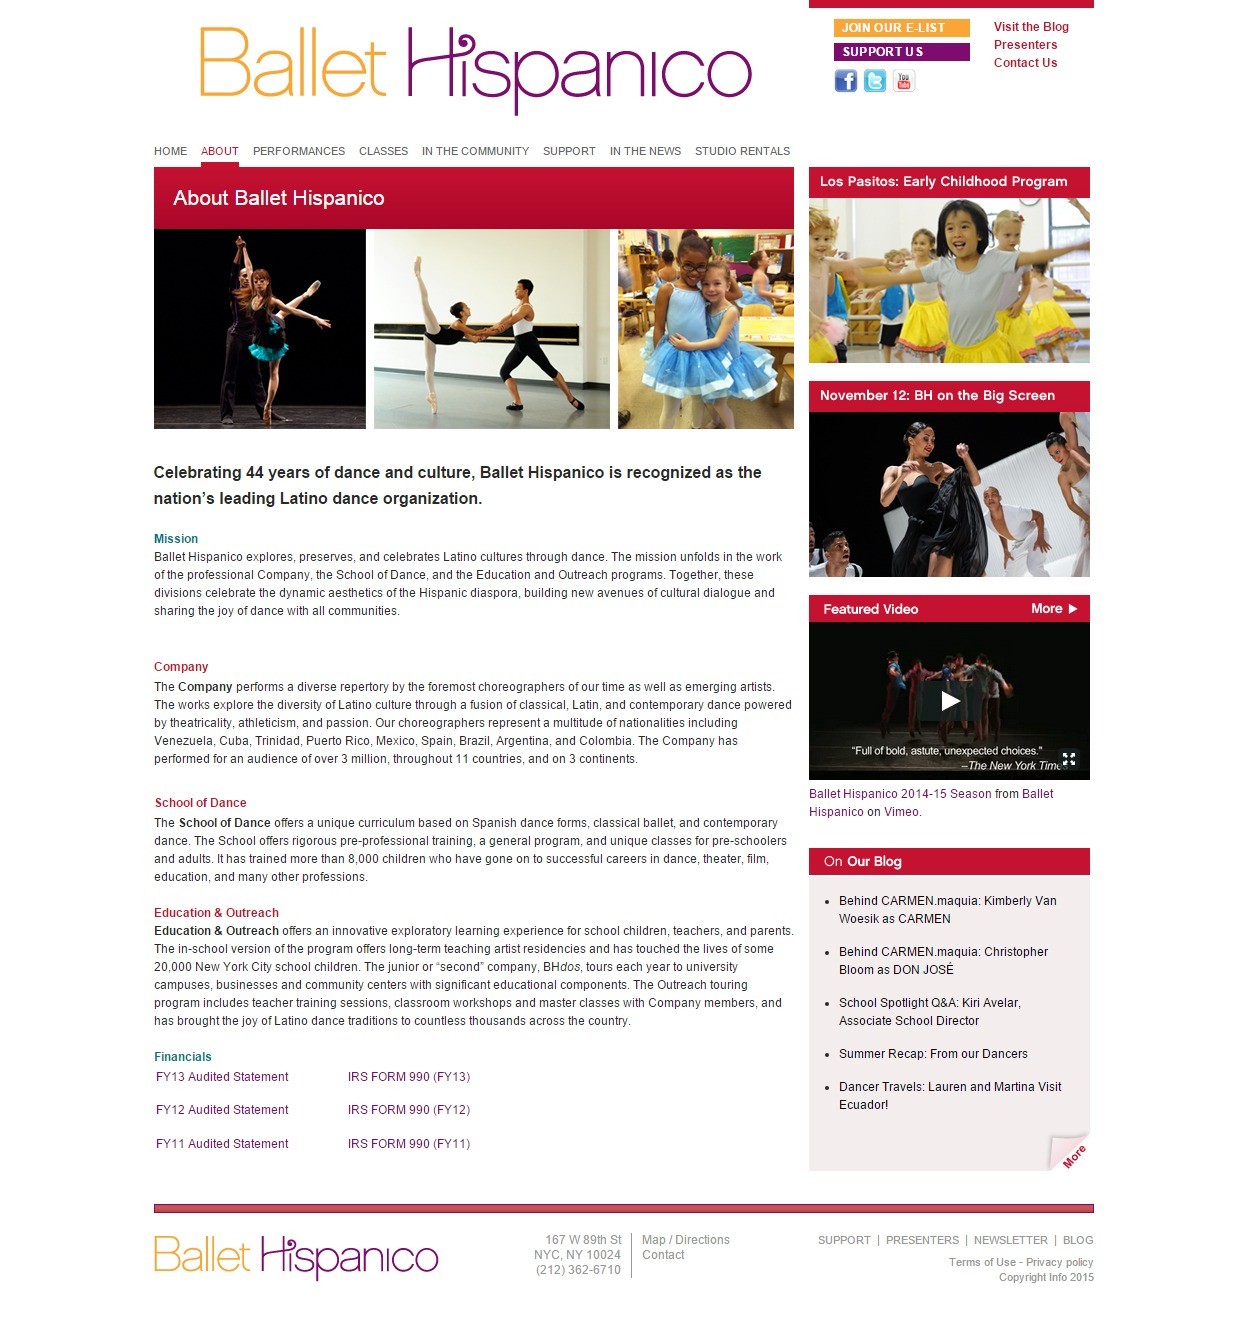 Ballet Hispanico WYSIWYG